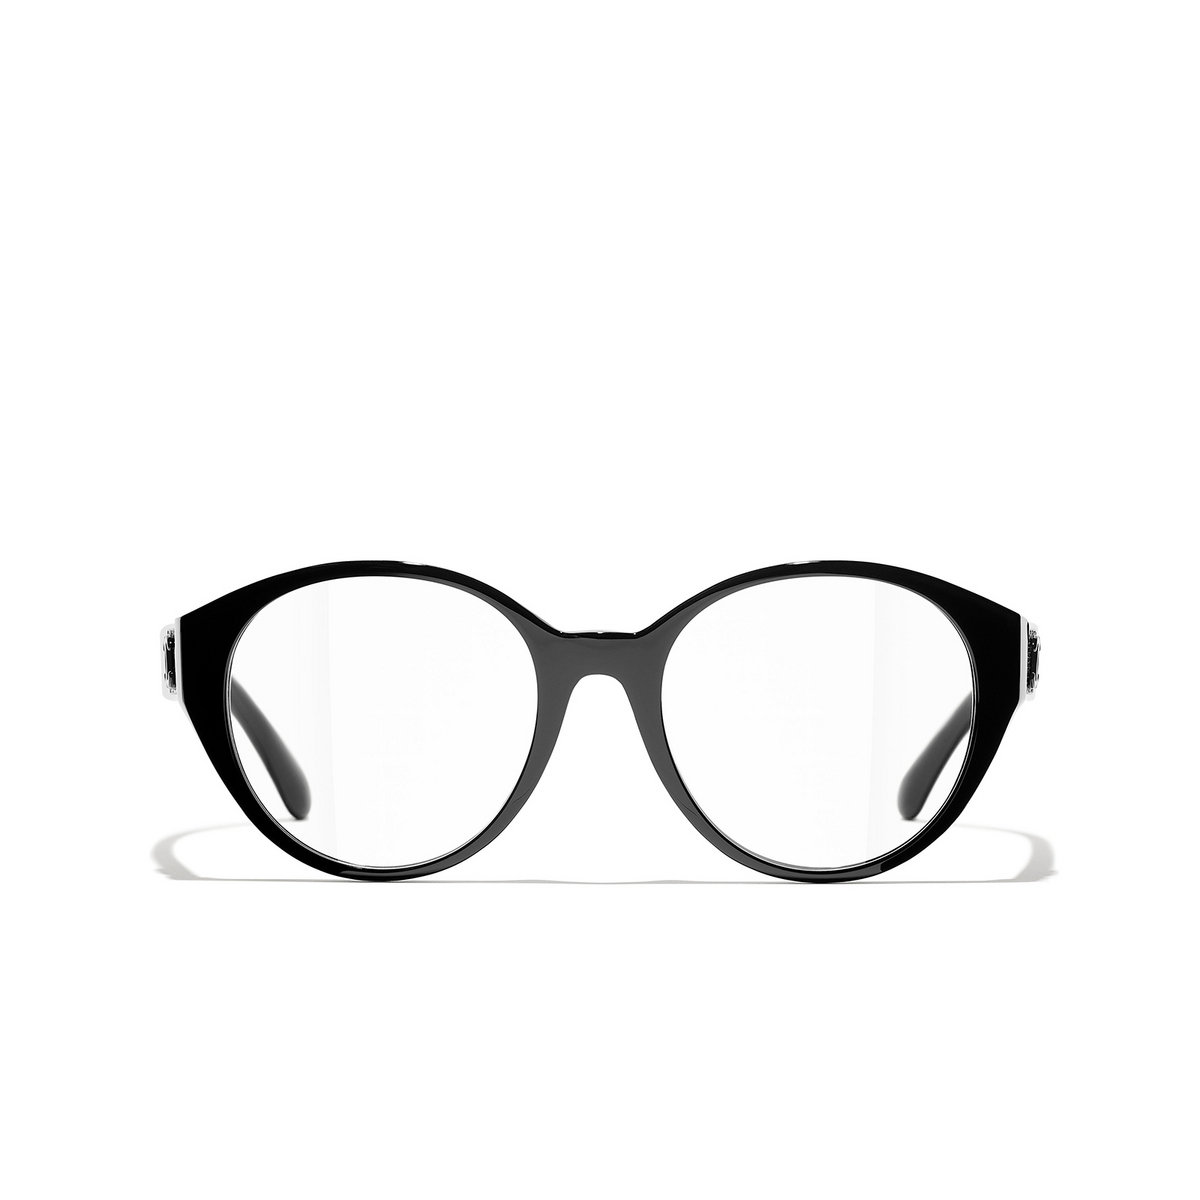 CHANEL round Eyeglasses C888 Black - front view